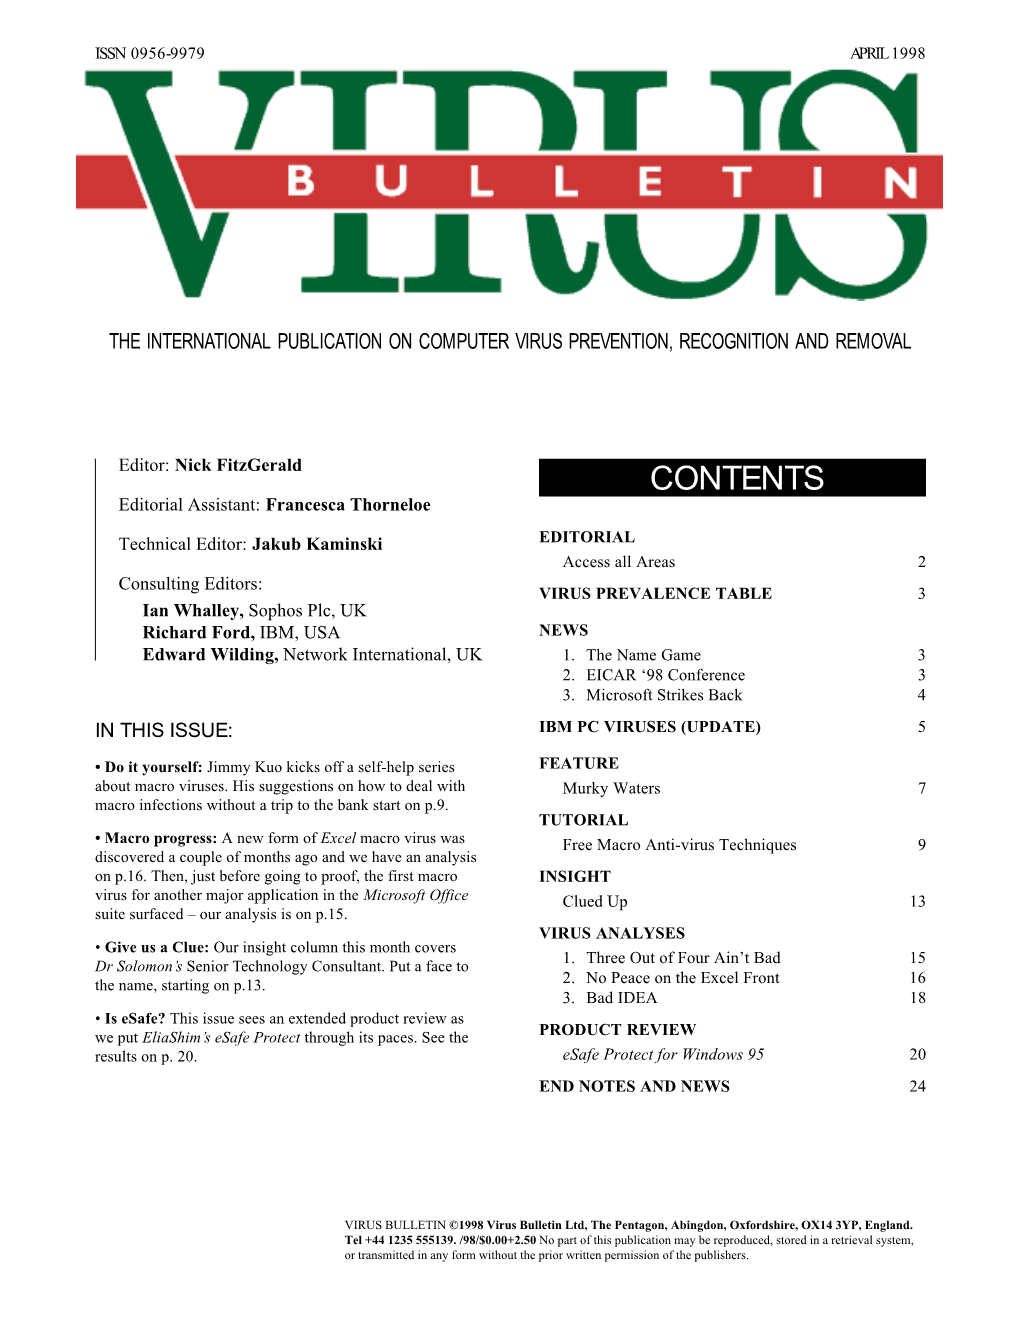 Virus Bulletin, April 1998